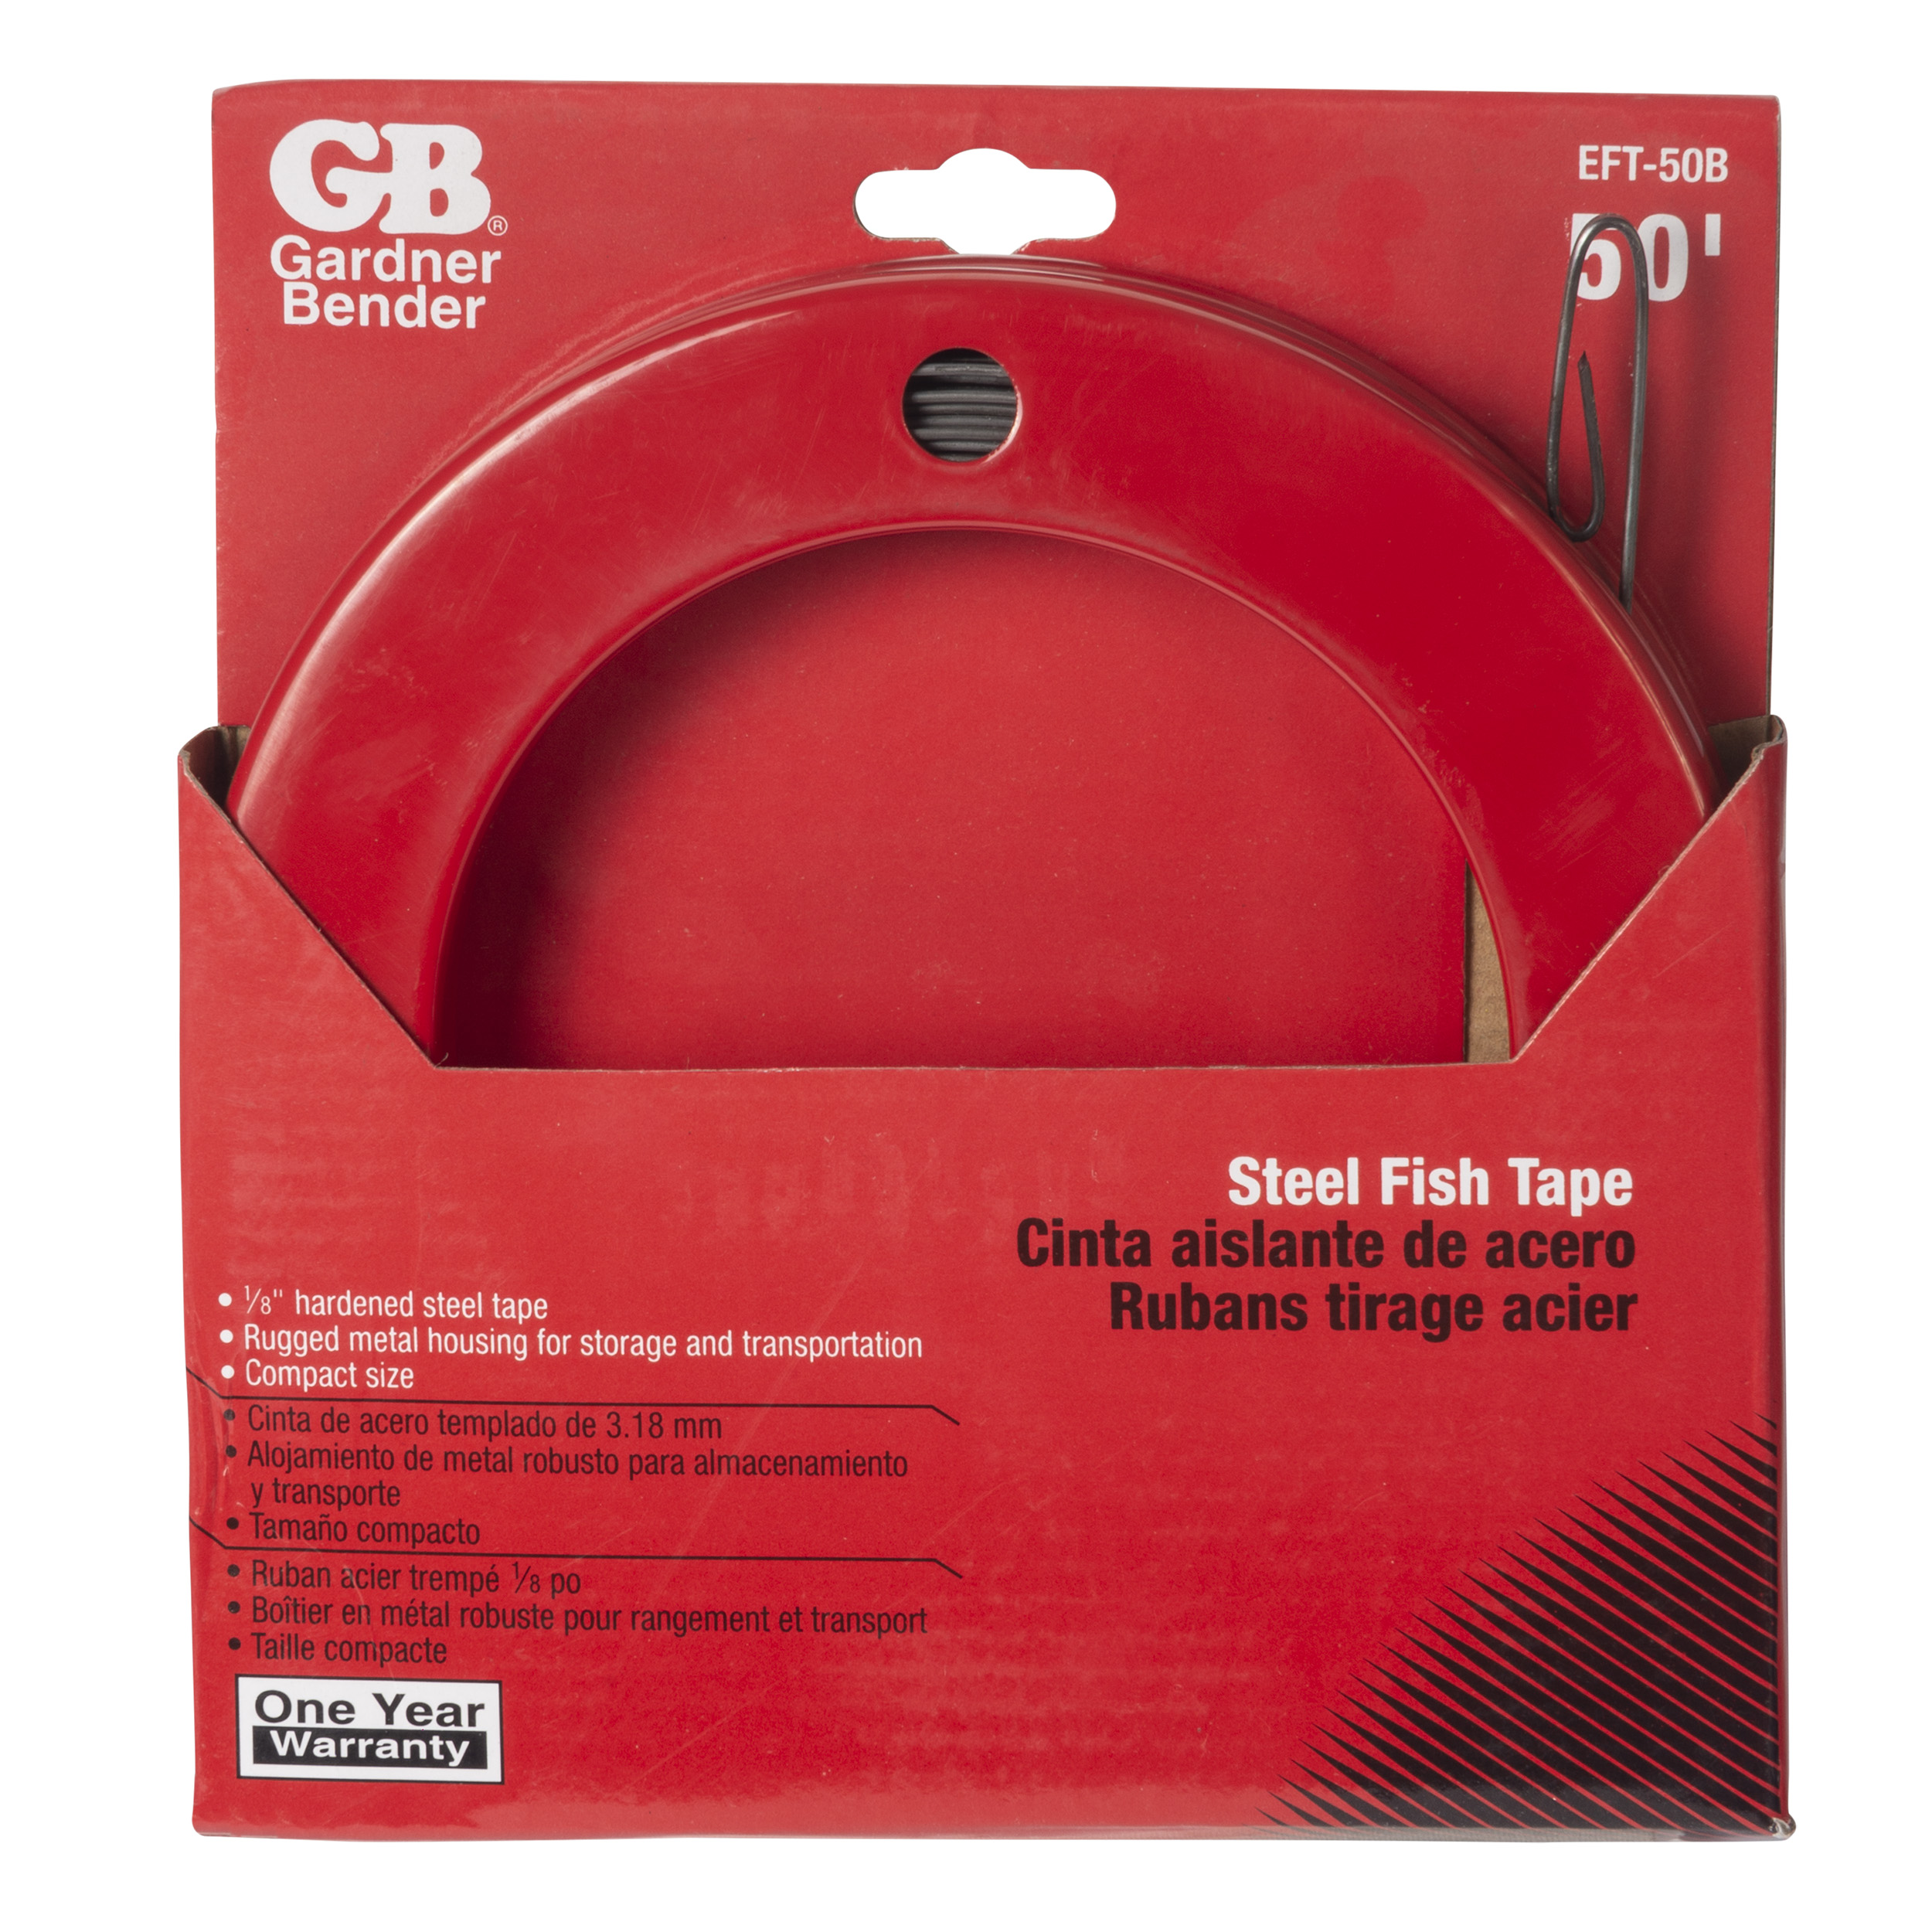 GB Gardner Bender Eft-50b Streamline Steel Fish Tape for sale online 